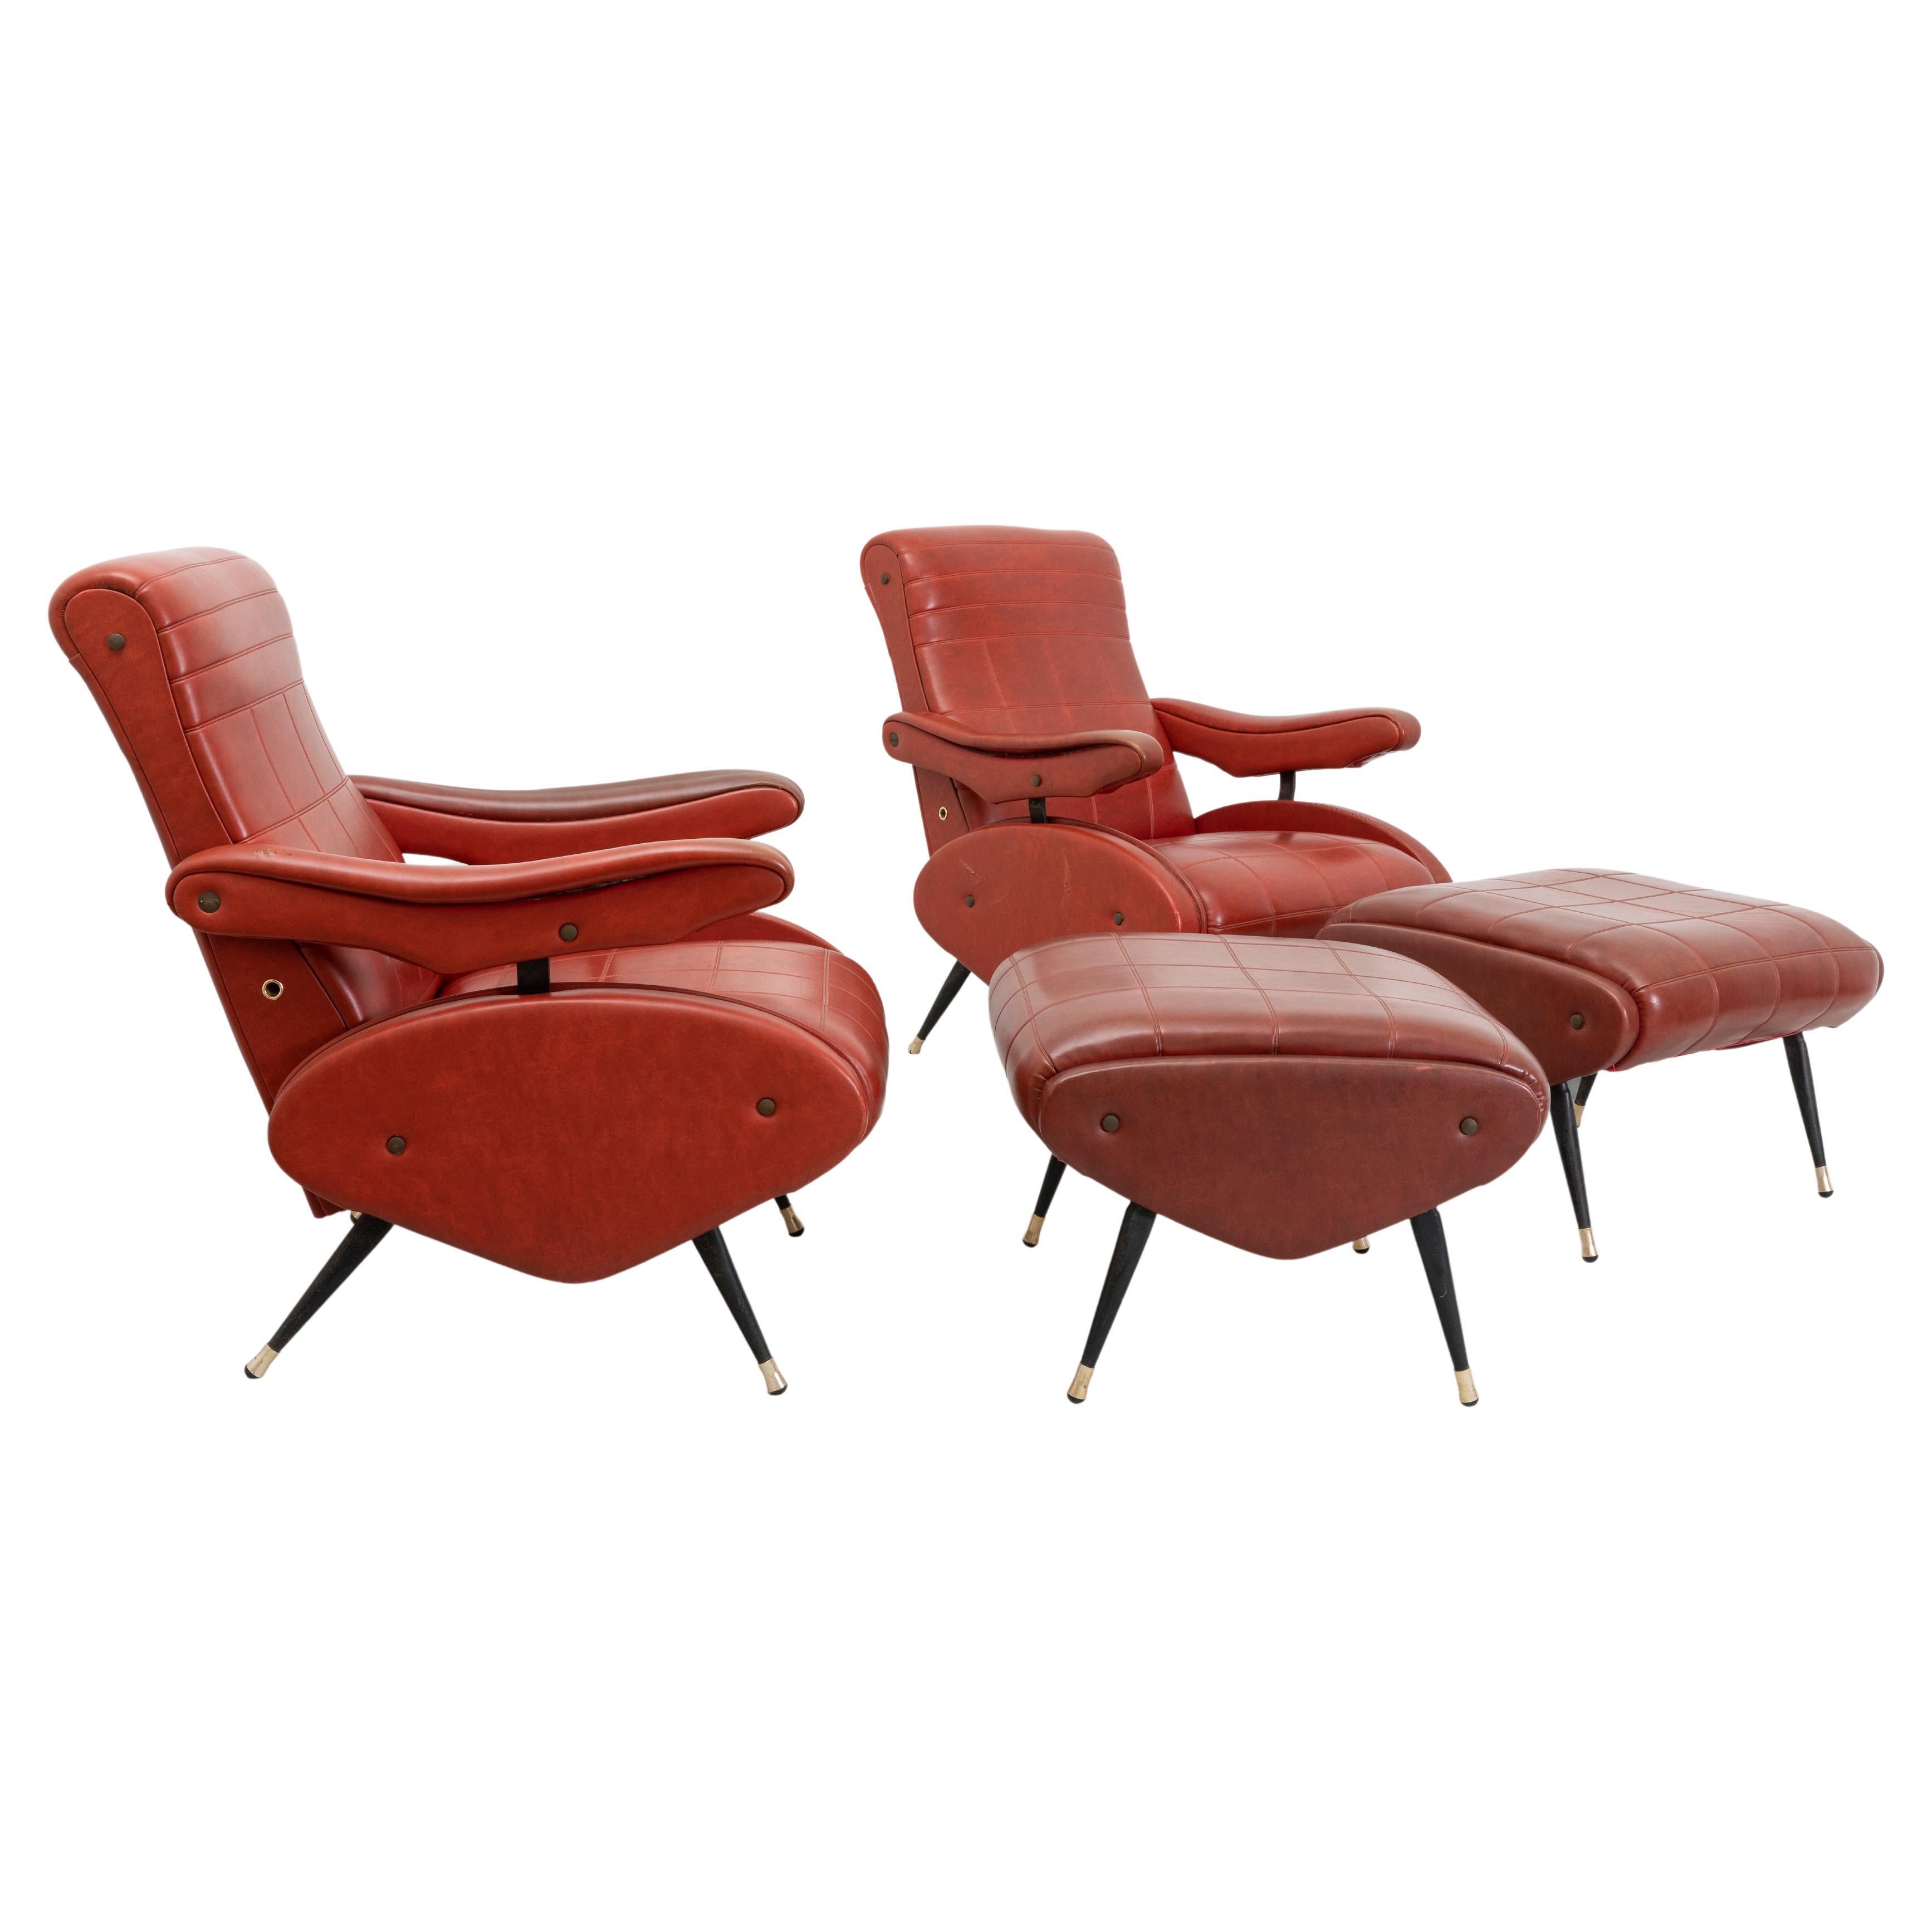 Nello Pini Prod. Novarredo c. 1950-1960 Two reclining armchairs and two pouffs